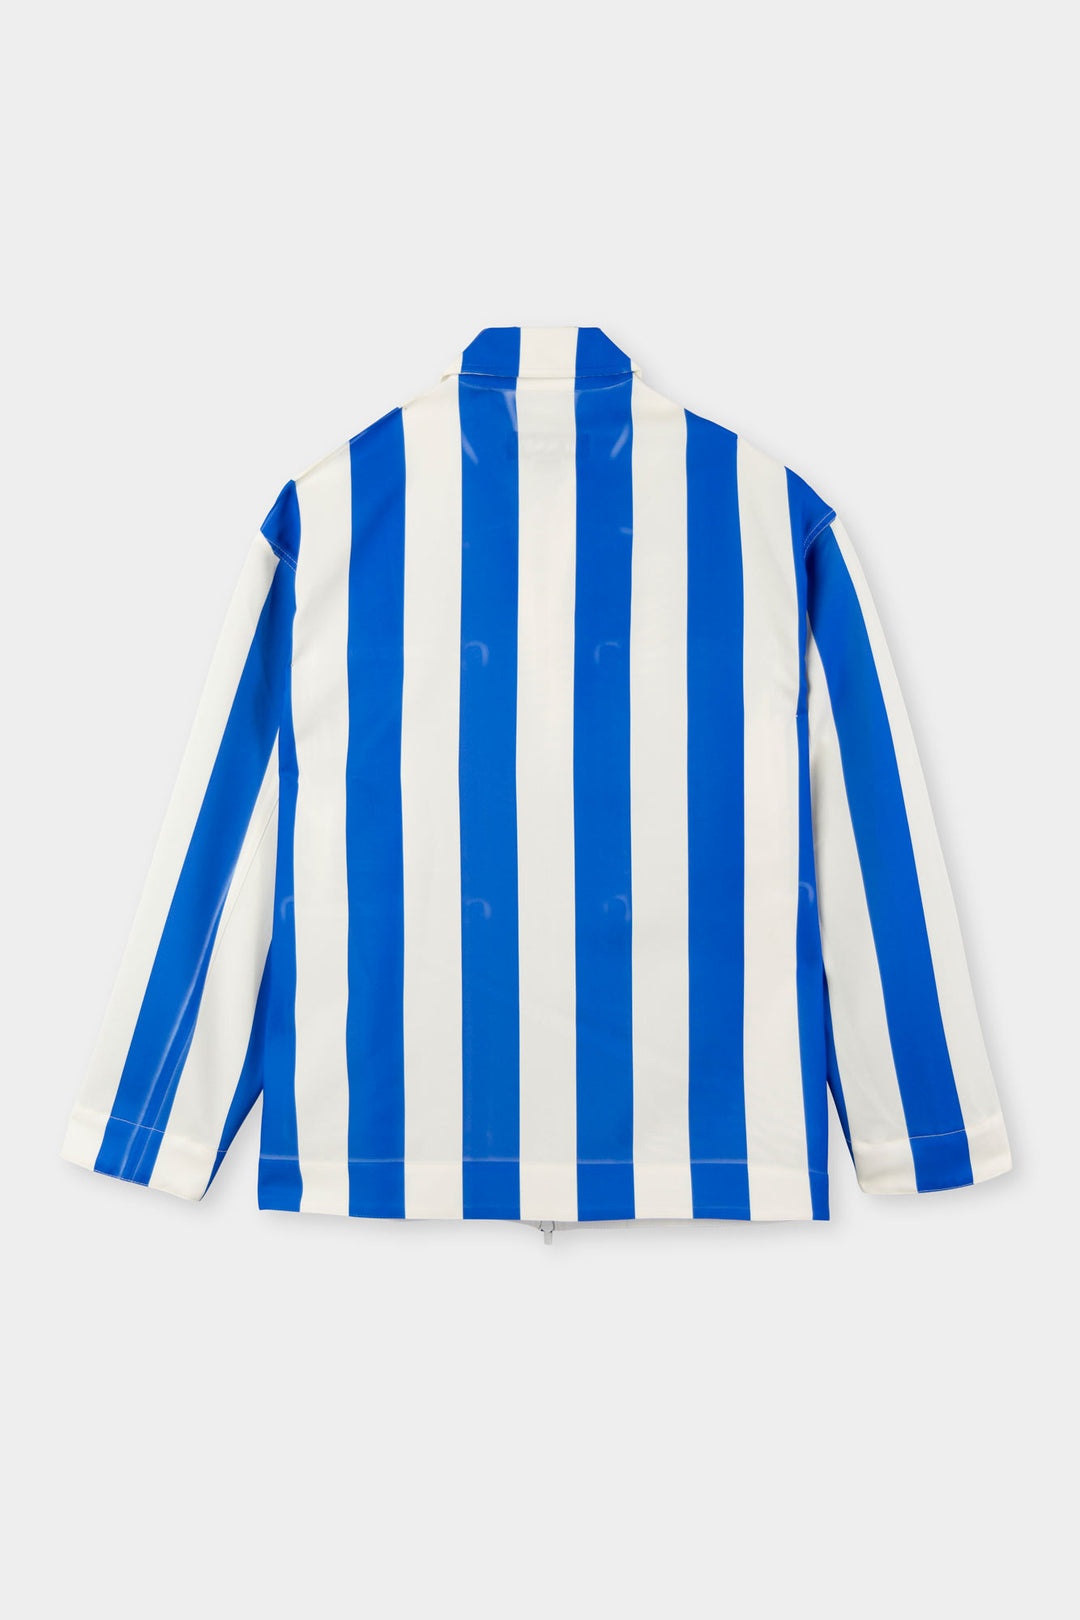 CARGO SHIRT / blue & beige stripes - 4